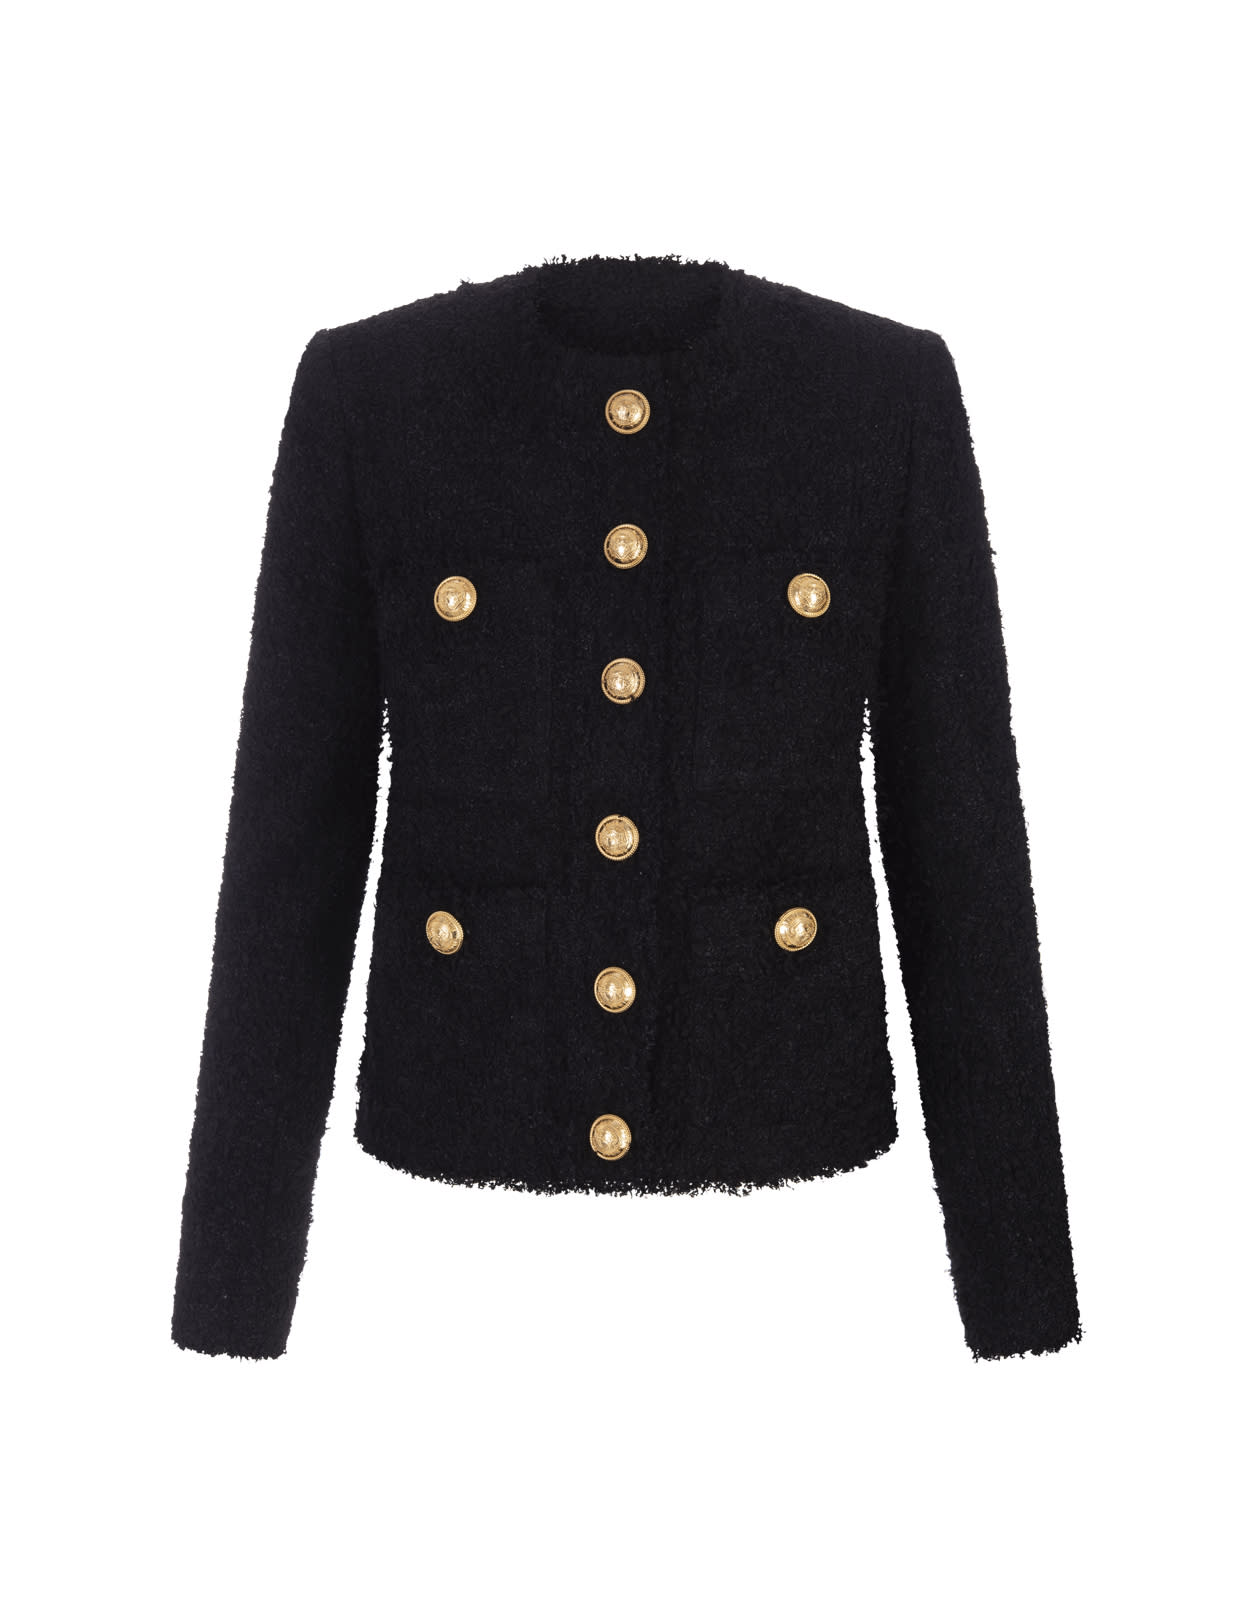 Balmain Black Tweed Tailored Blazer